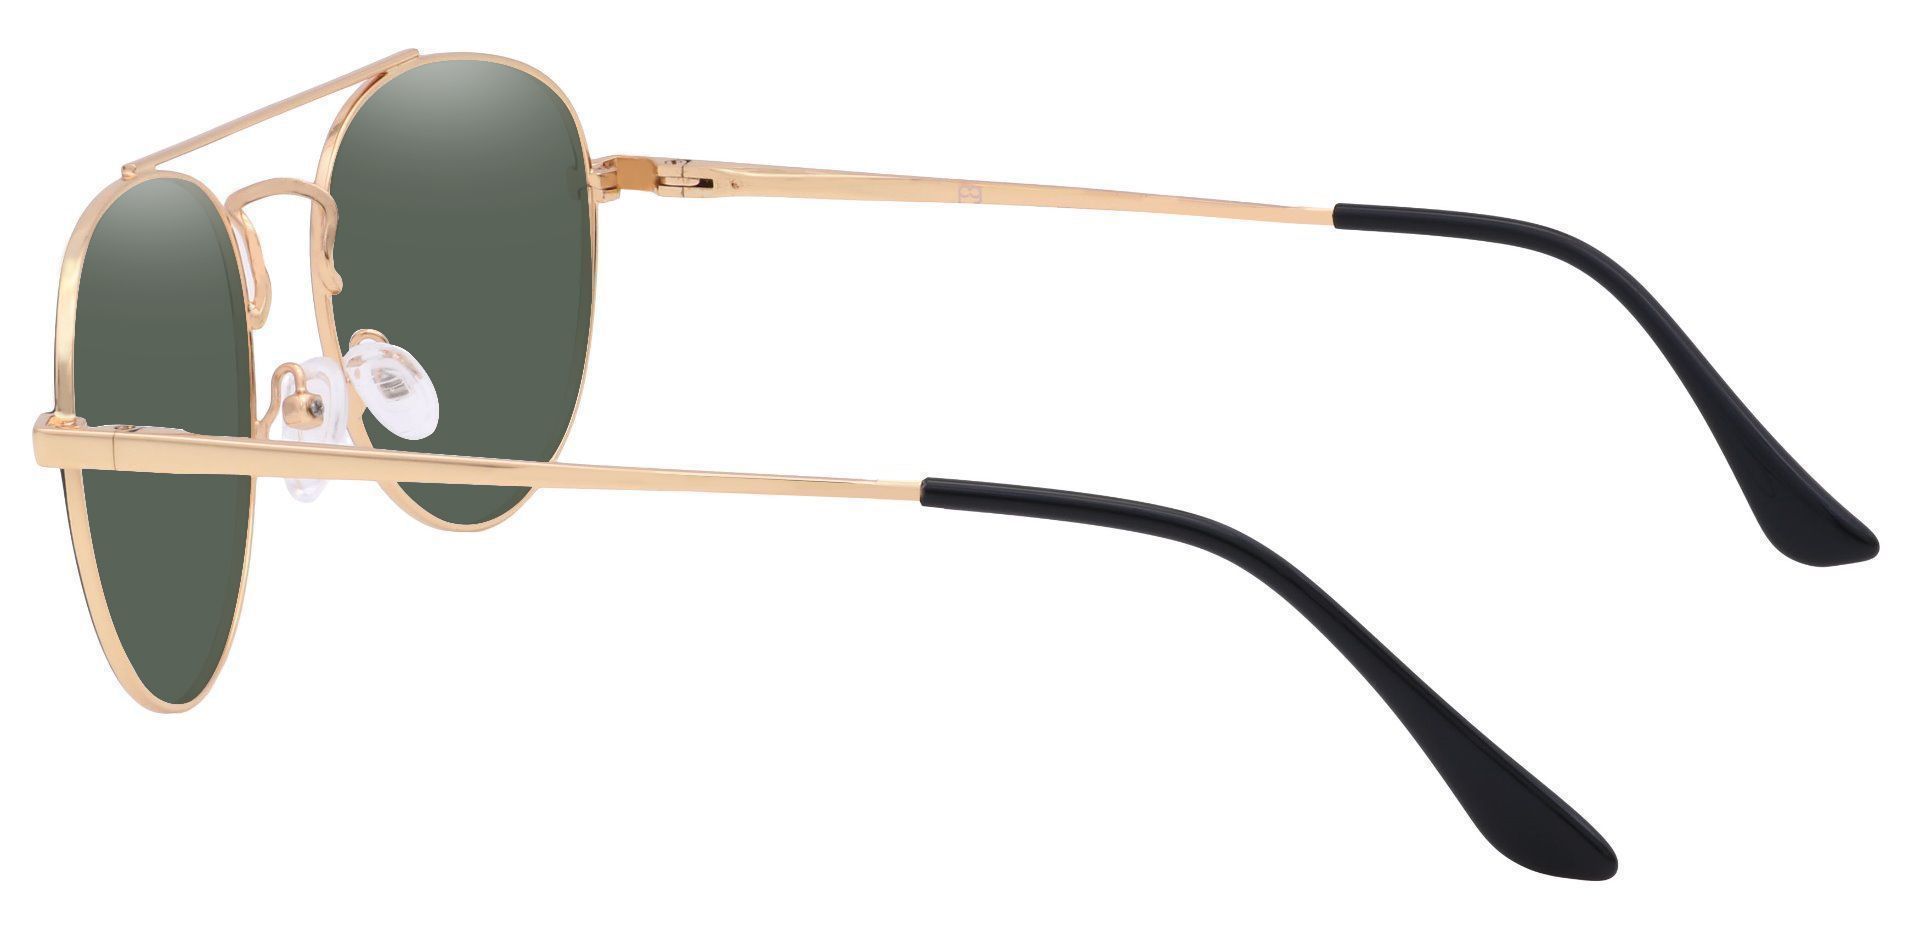 Trapp Aviator Progressive Sunglasses - Gold Frame With Green Lenses